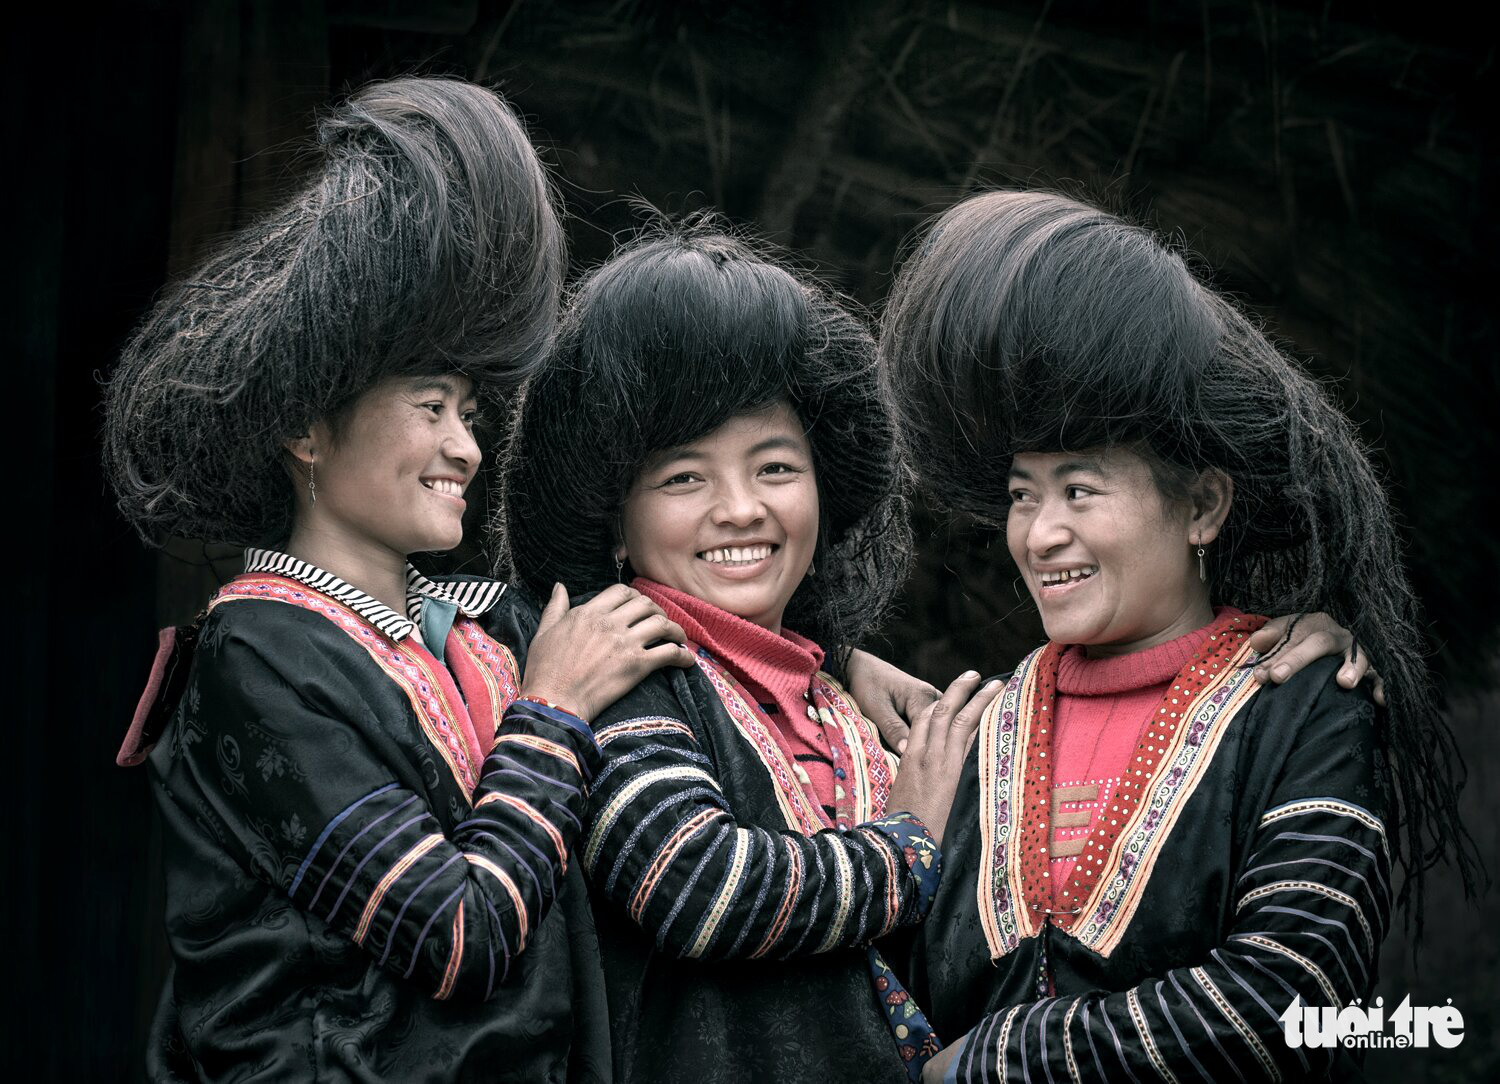 Photographer captures beauty of Vietnamese women through his lens